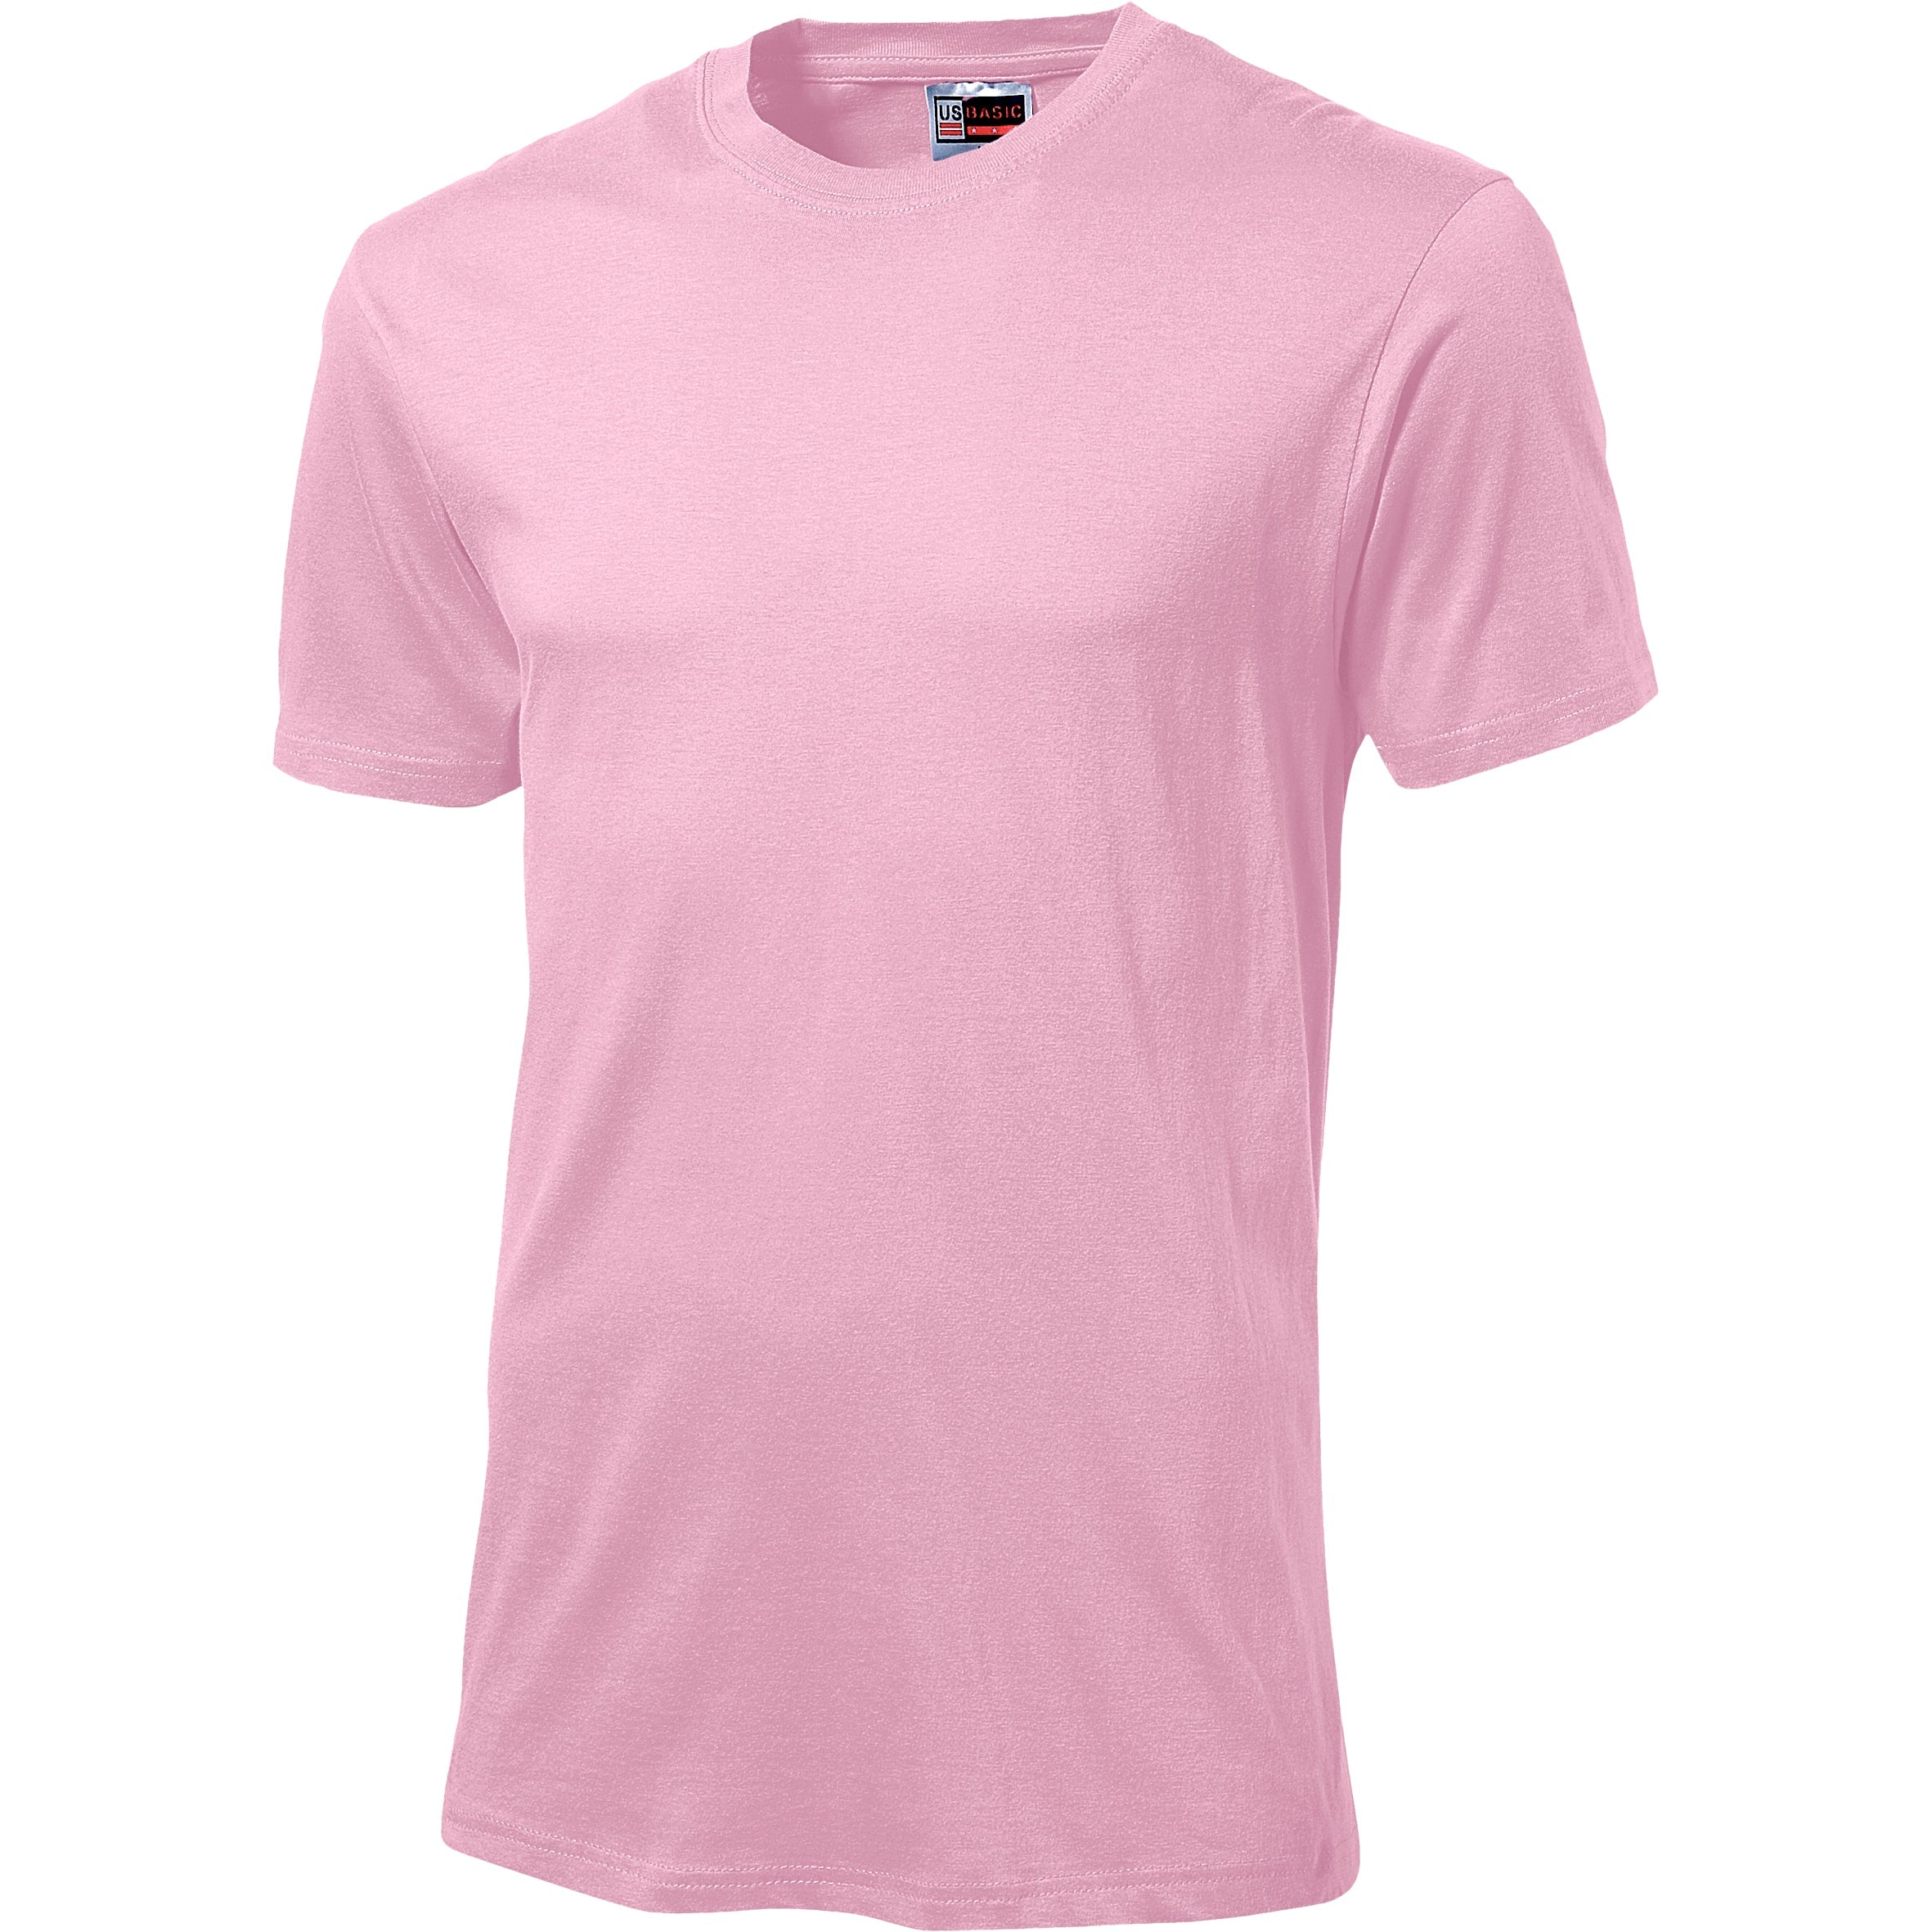 Unisex Super Club 135 T-Shirt L / Pink / PI